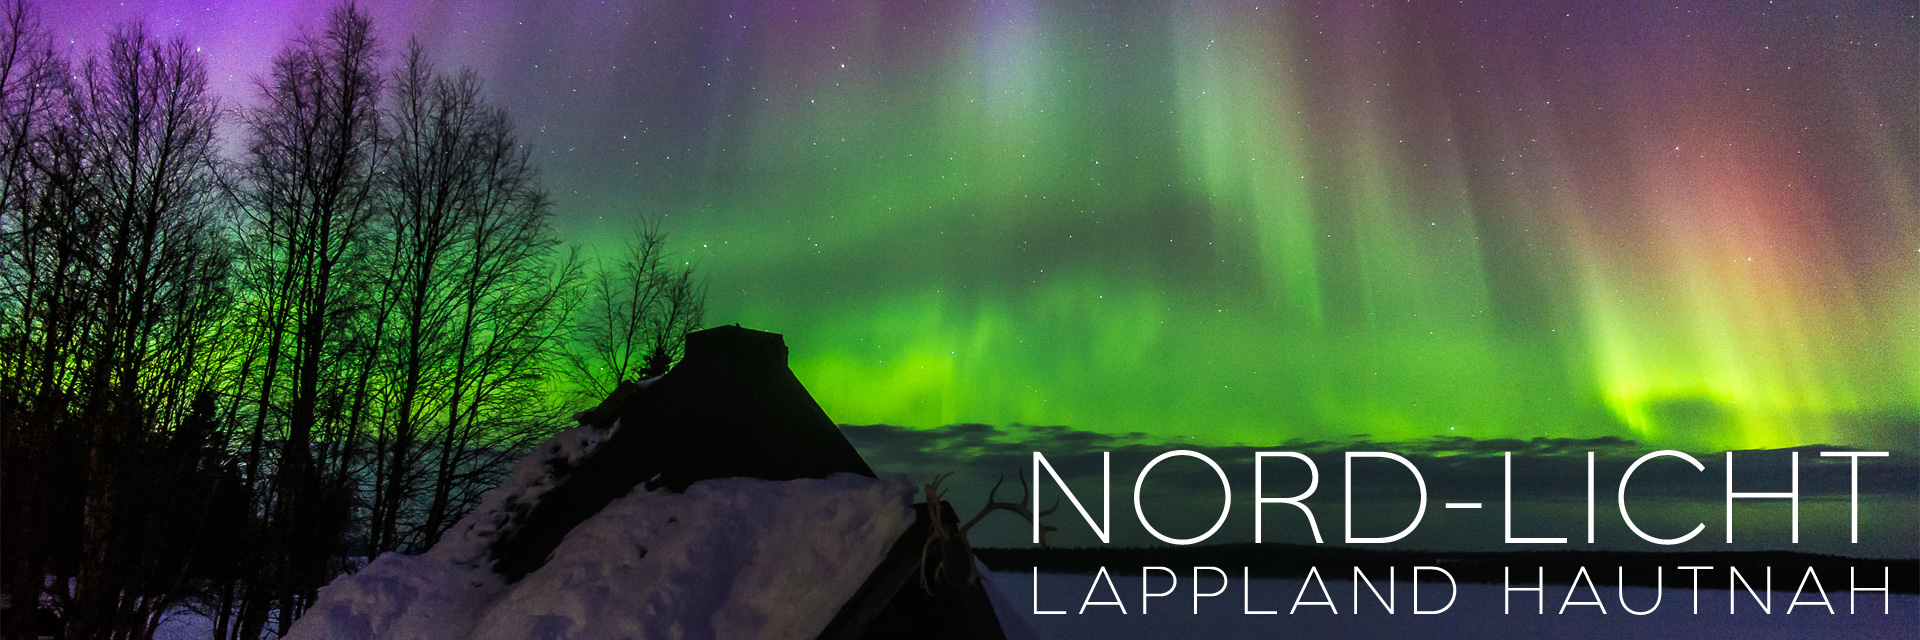 Nord-Licht – Lappland hautnah